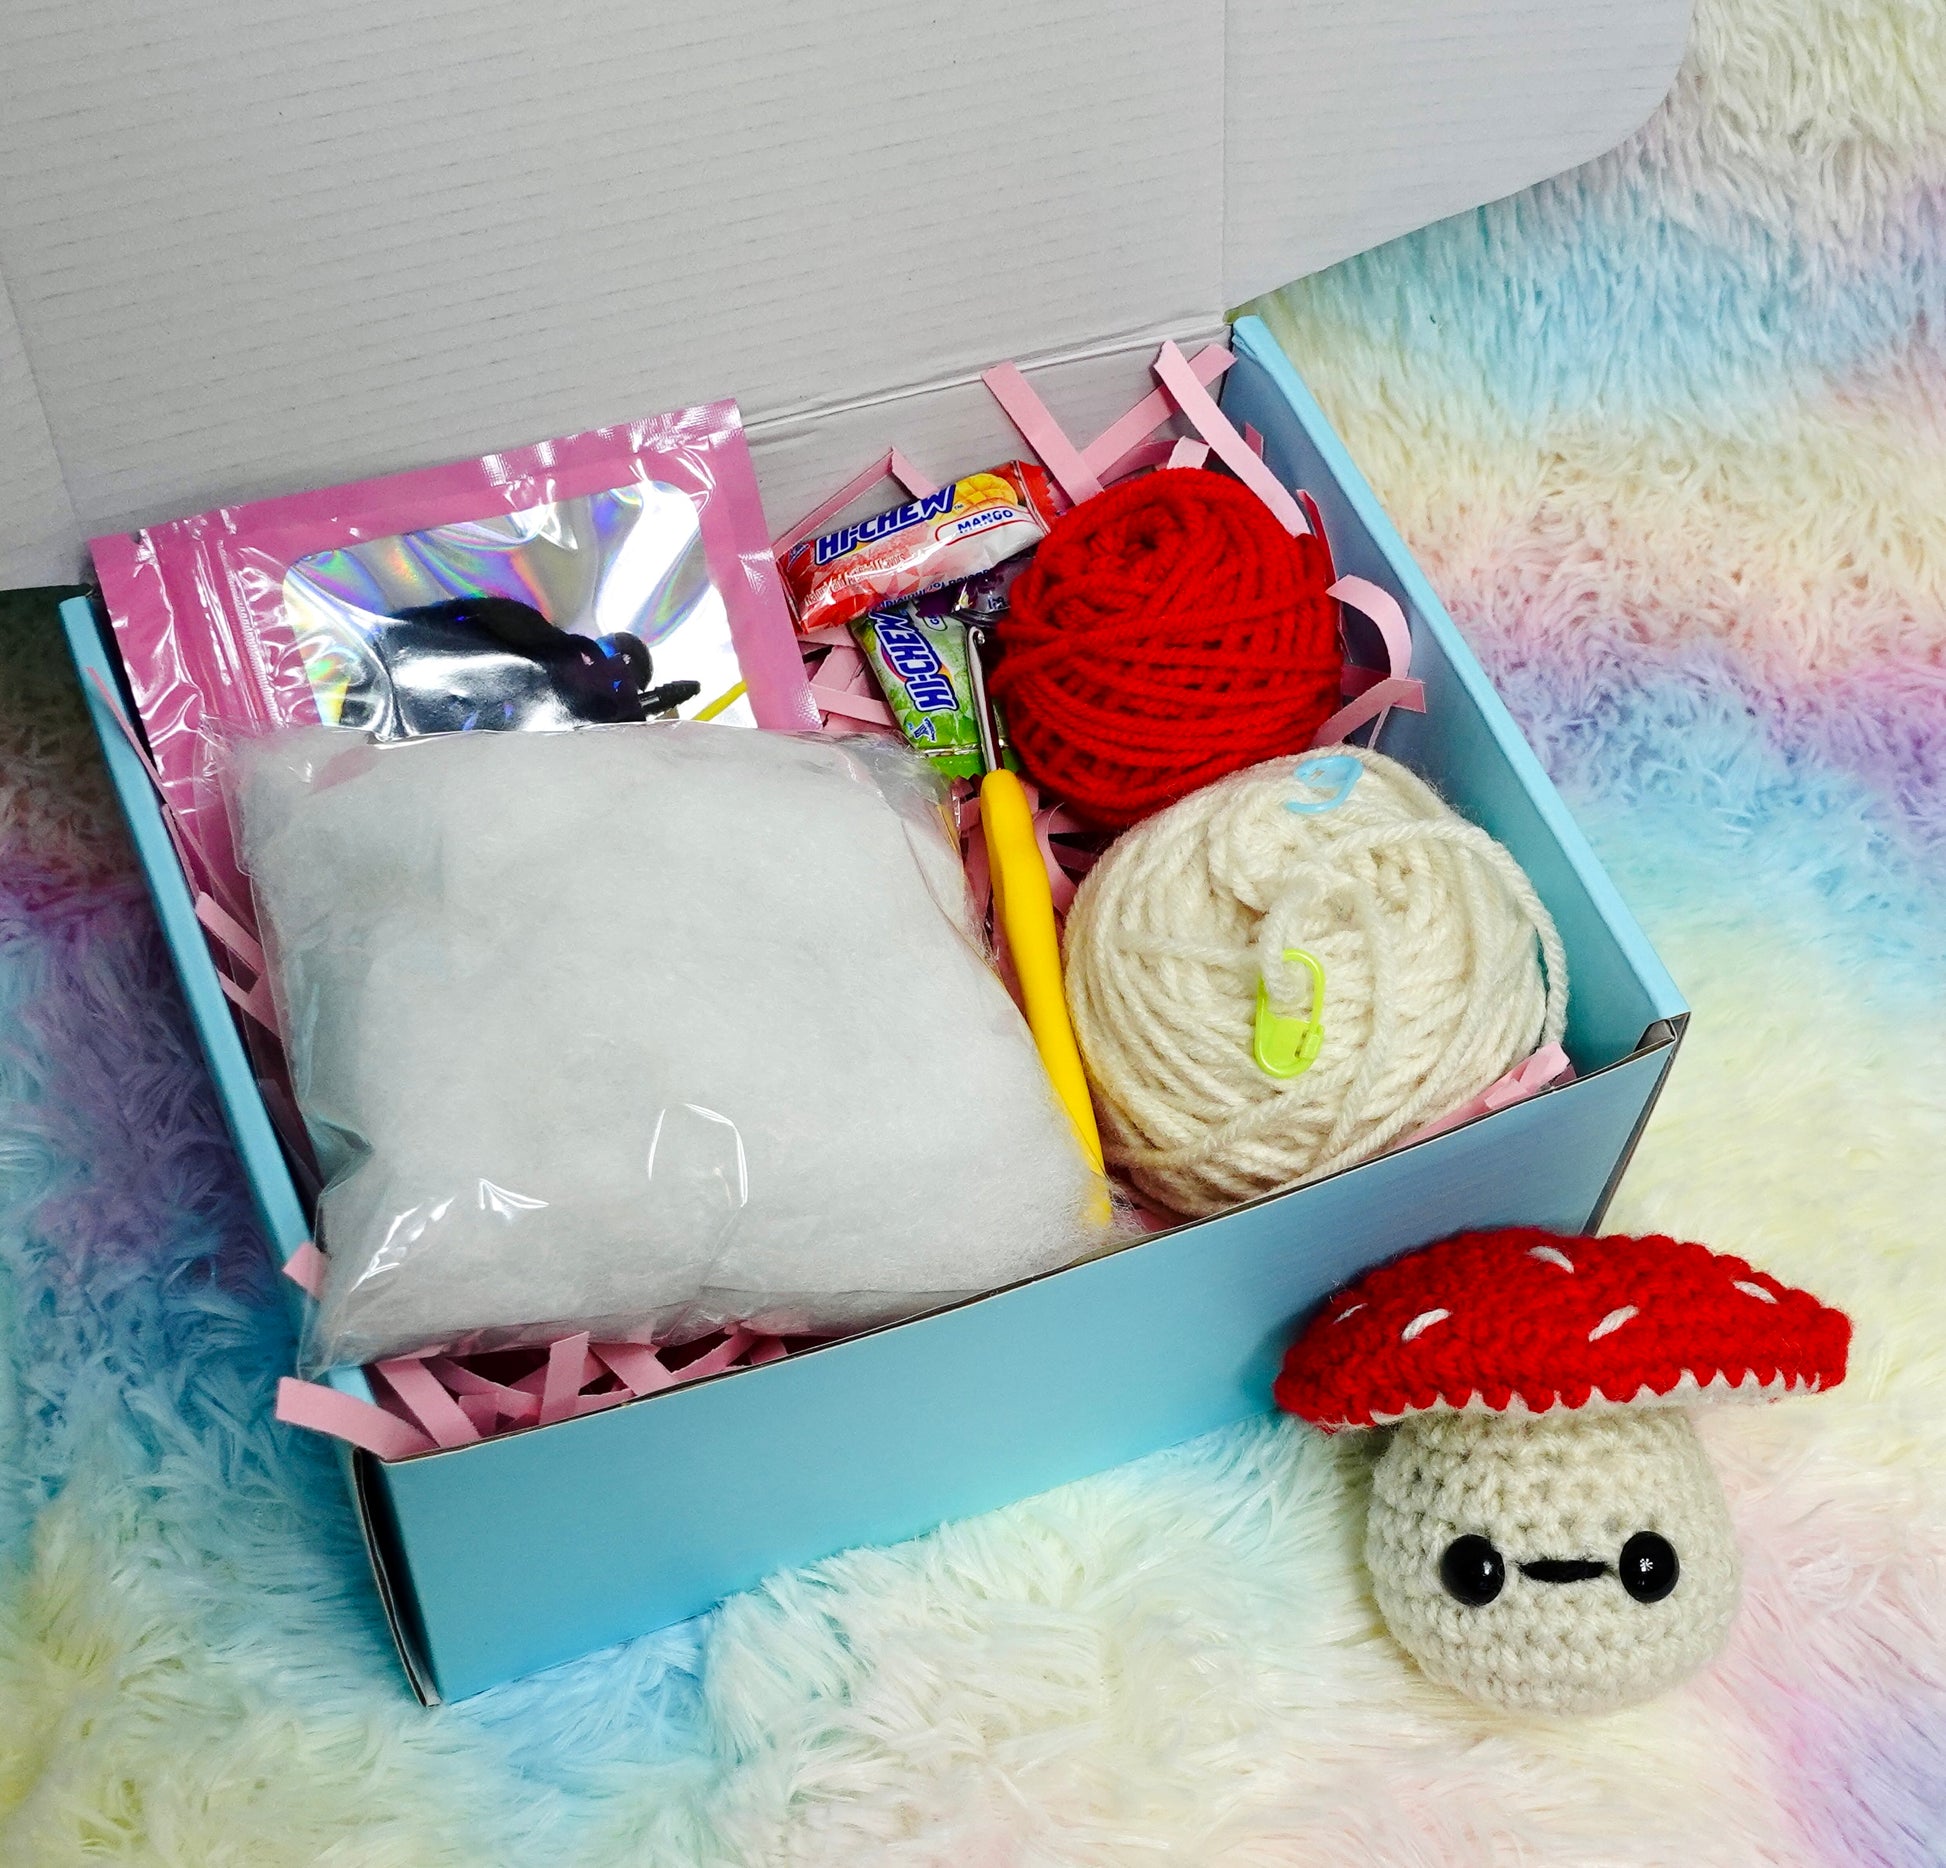  BWkoss Beginner Crochet Kit, Cute Mushroom Crochet